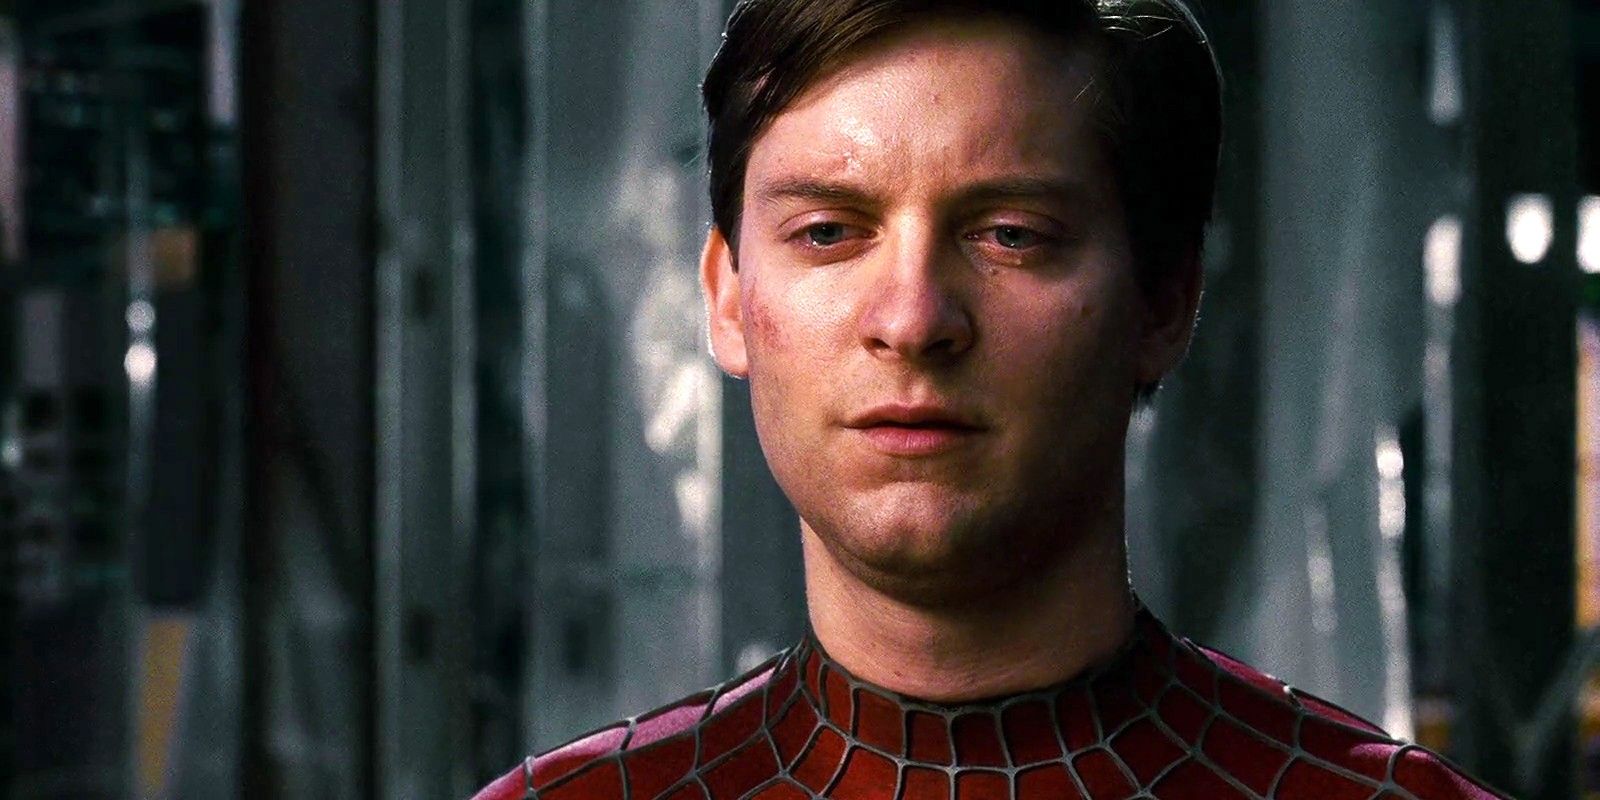 Tobey Maguire as Spider Man in Spider Man 3